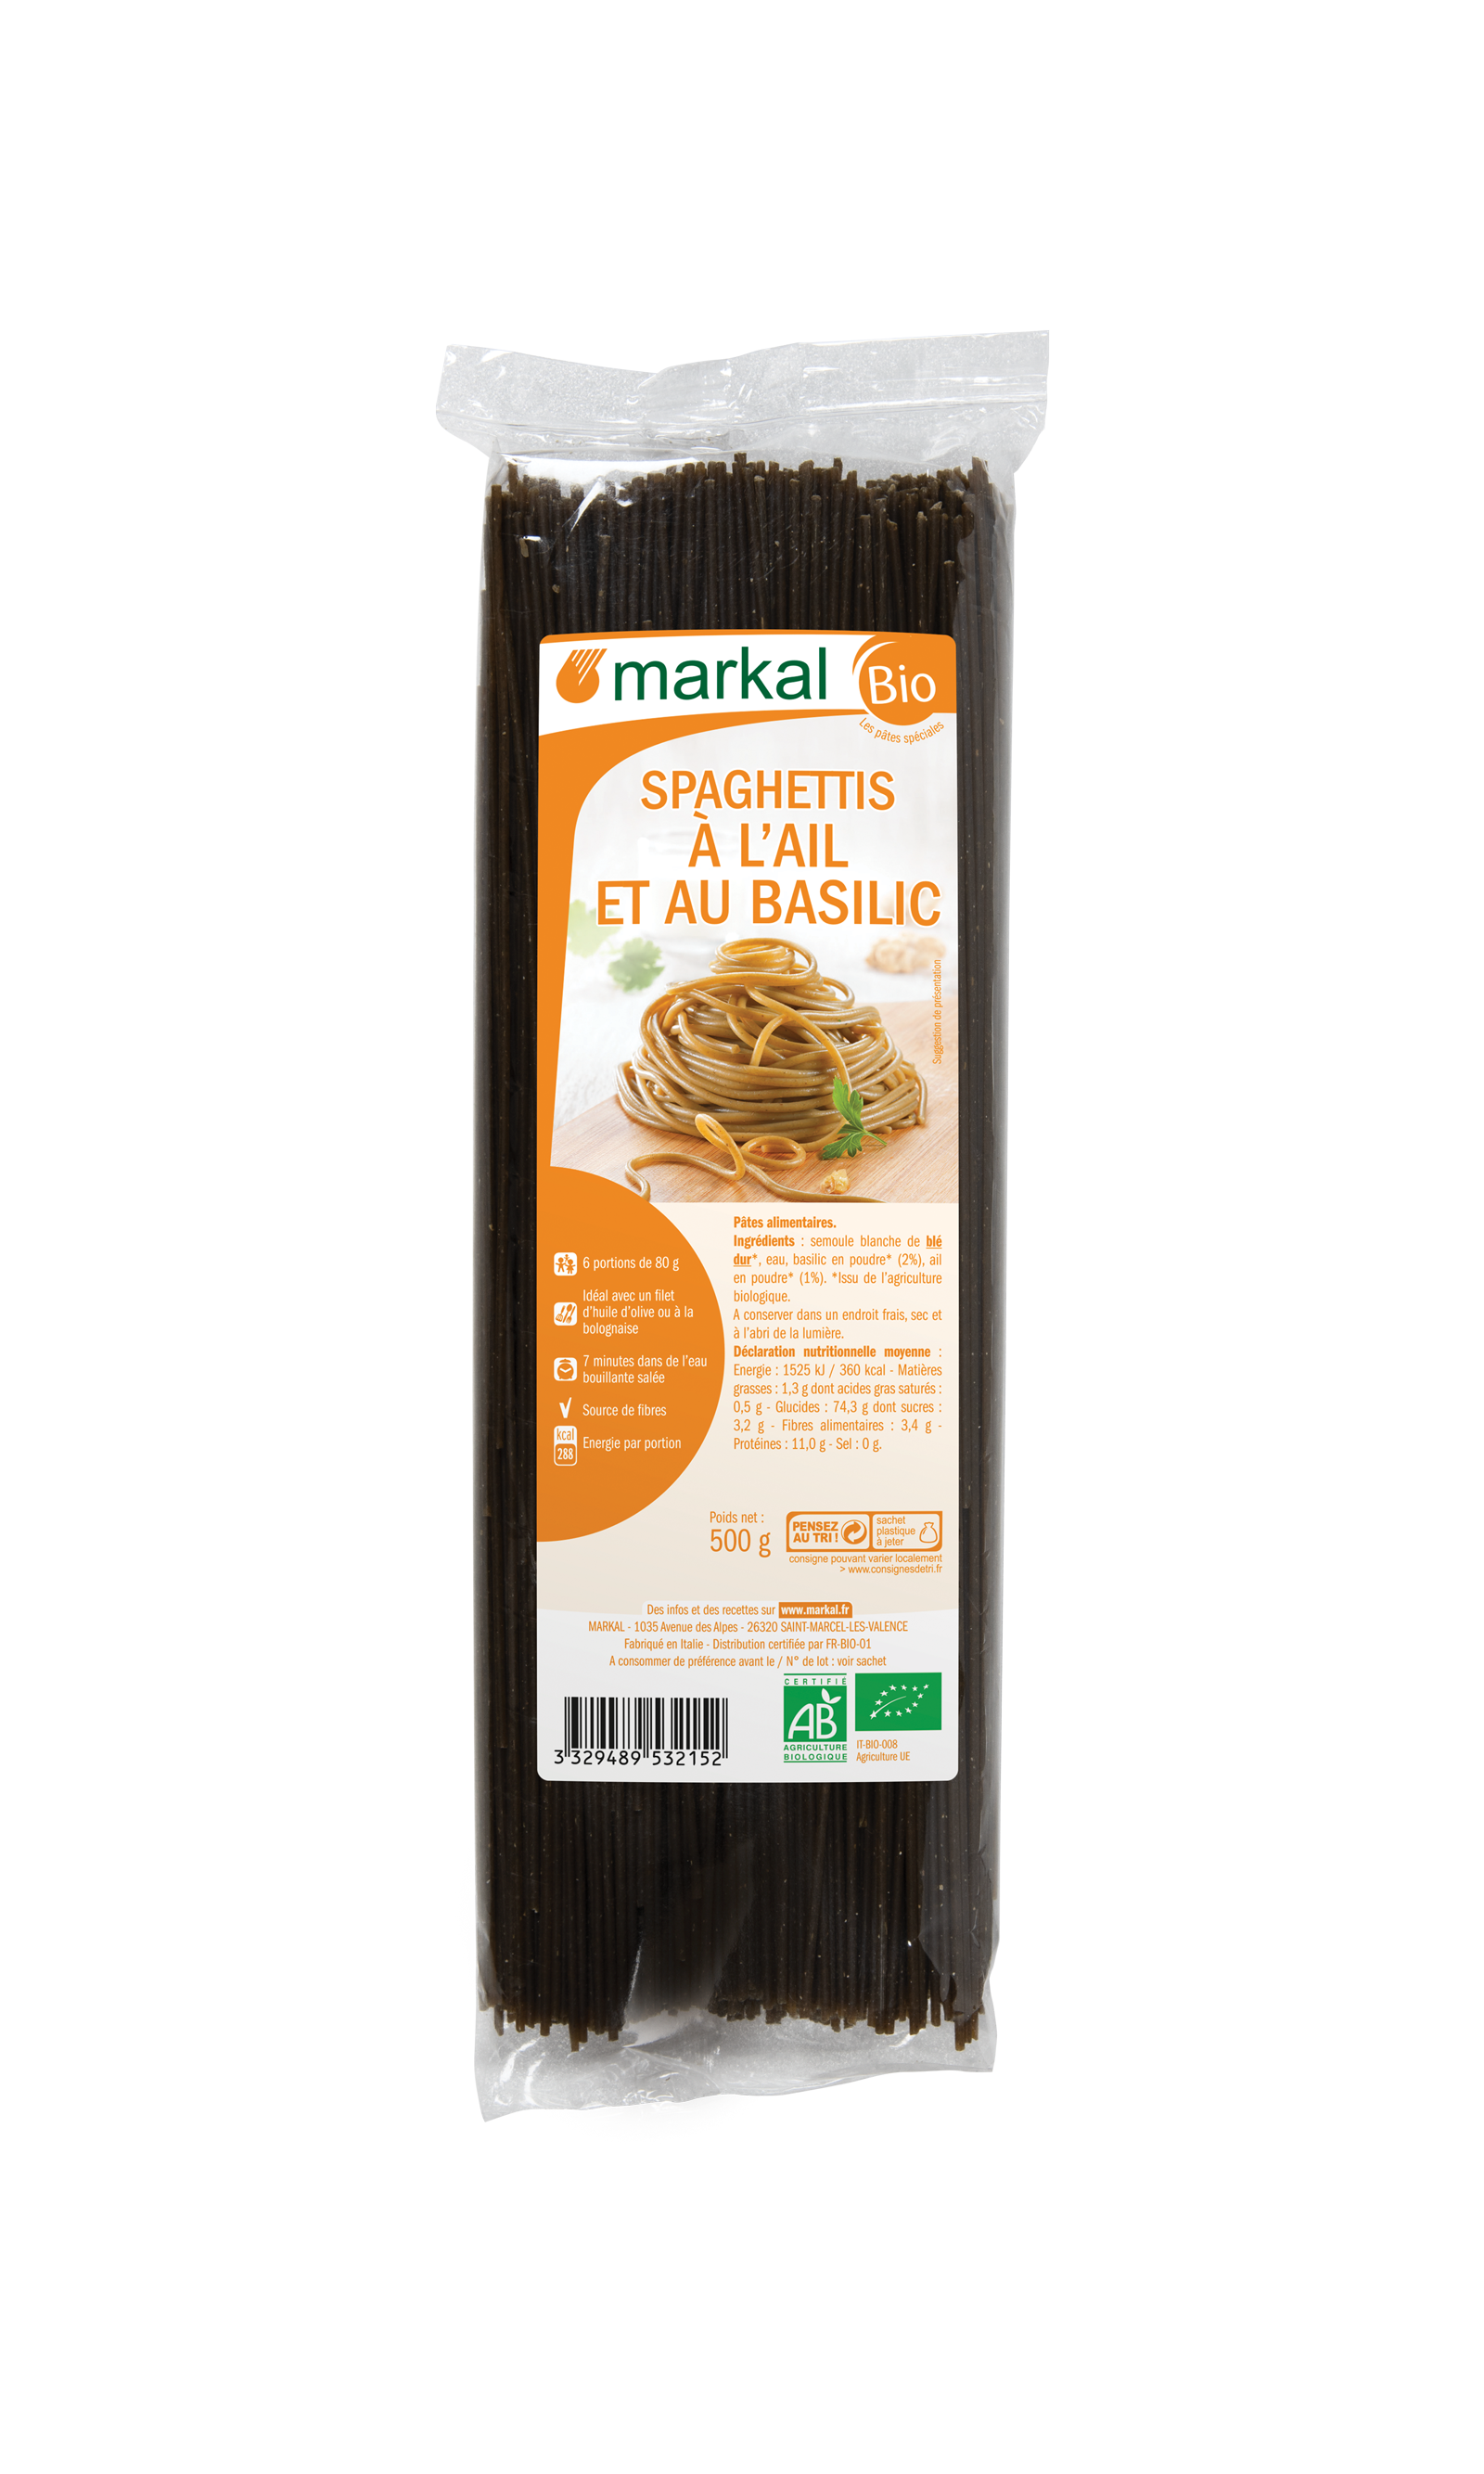 Spaghetti ail-basilic
Cuisson rapide